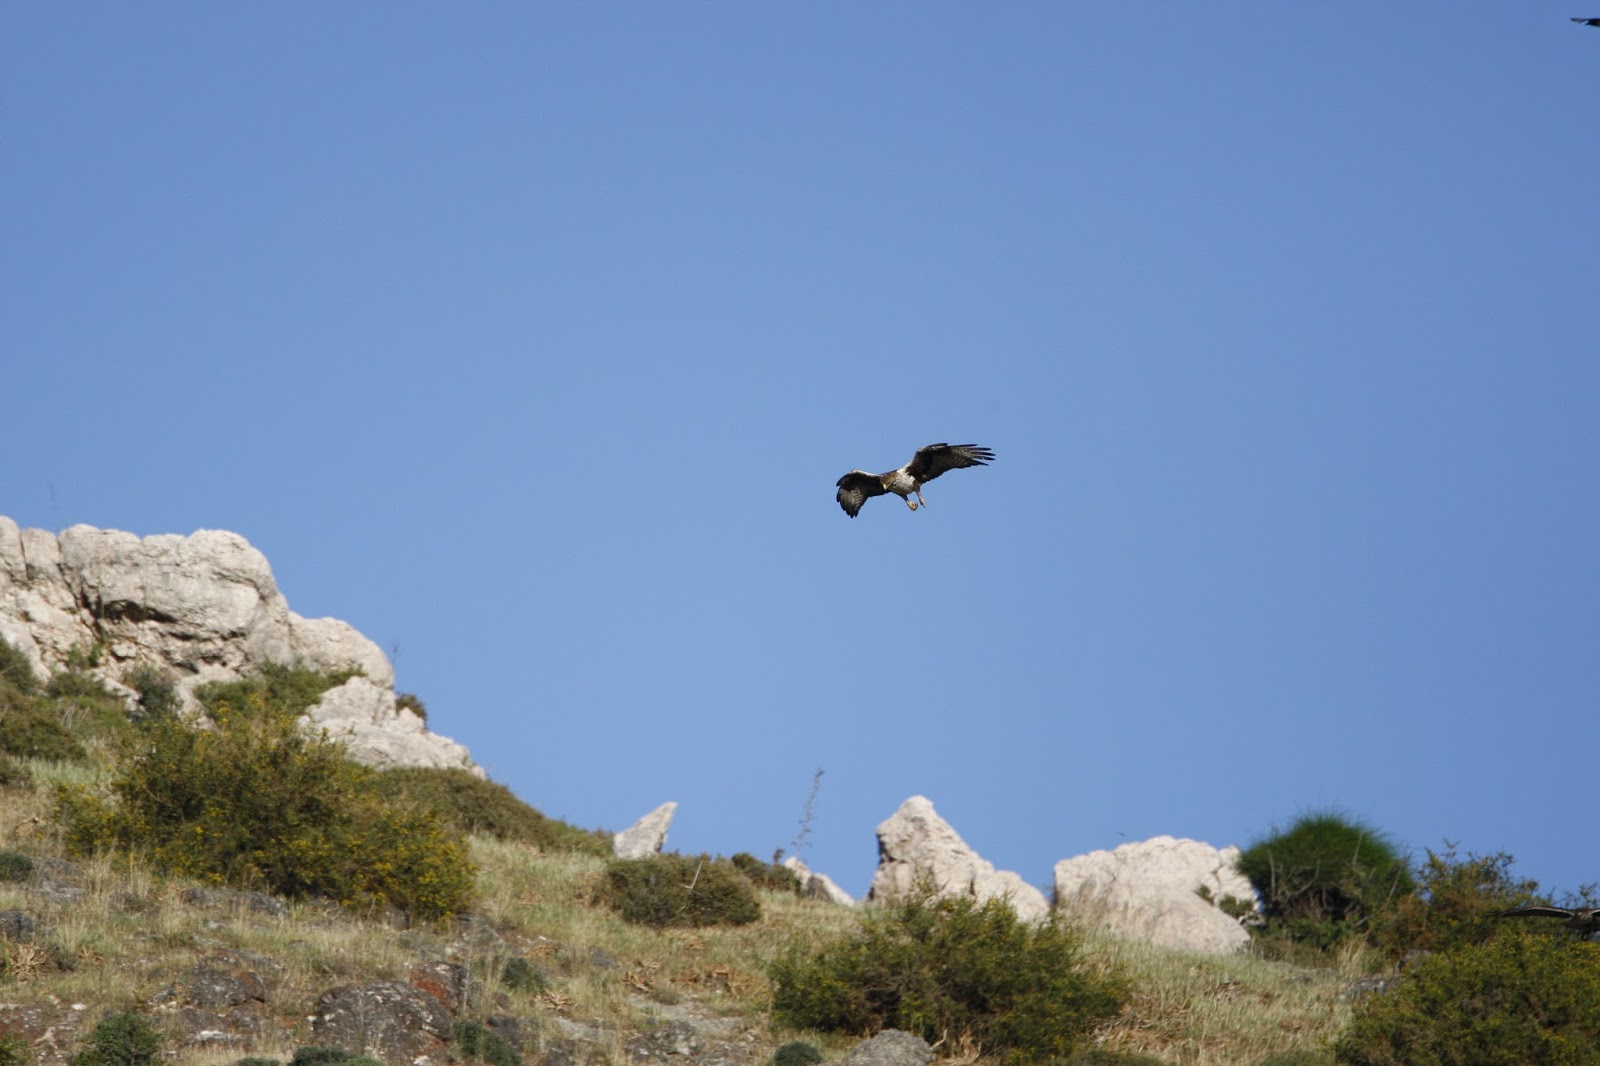 A Walk On The Wildside/Paul Foster.: Bonellis Eagle at Anarita/ Cyprus